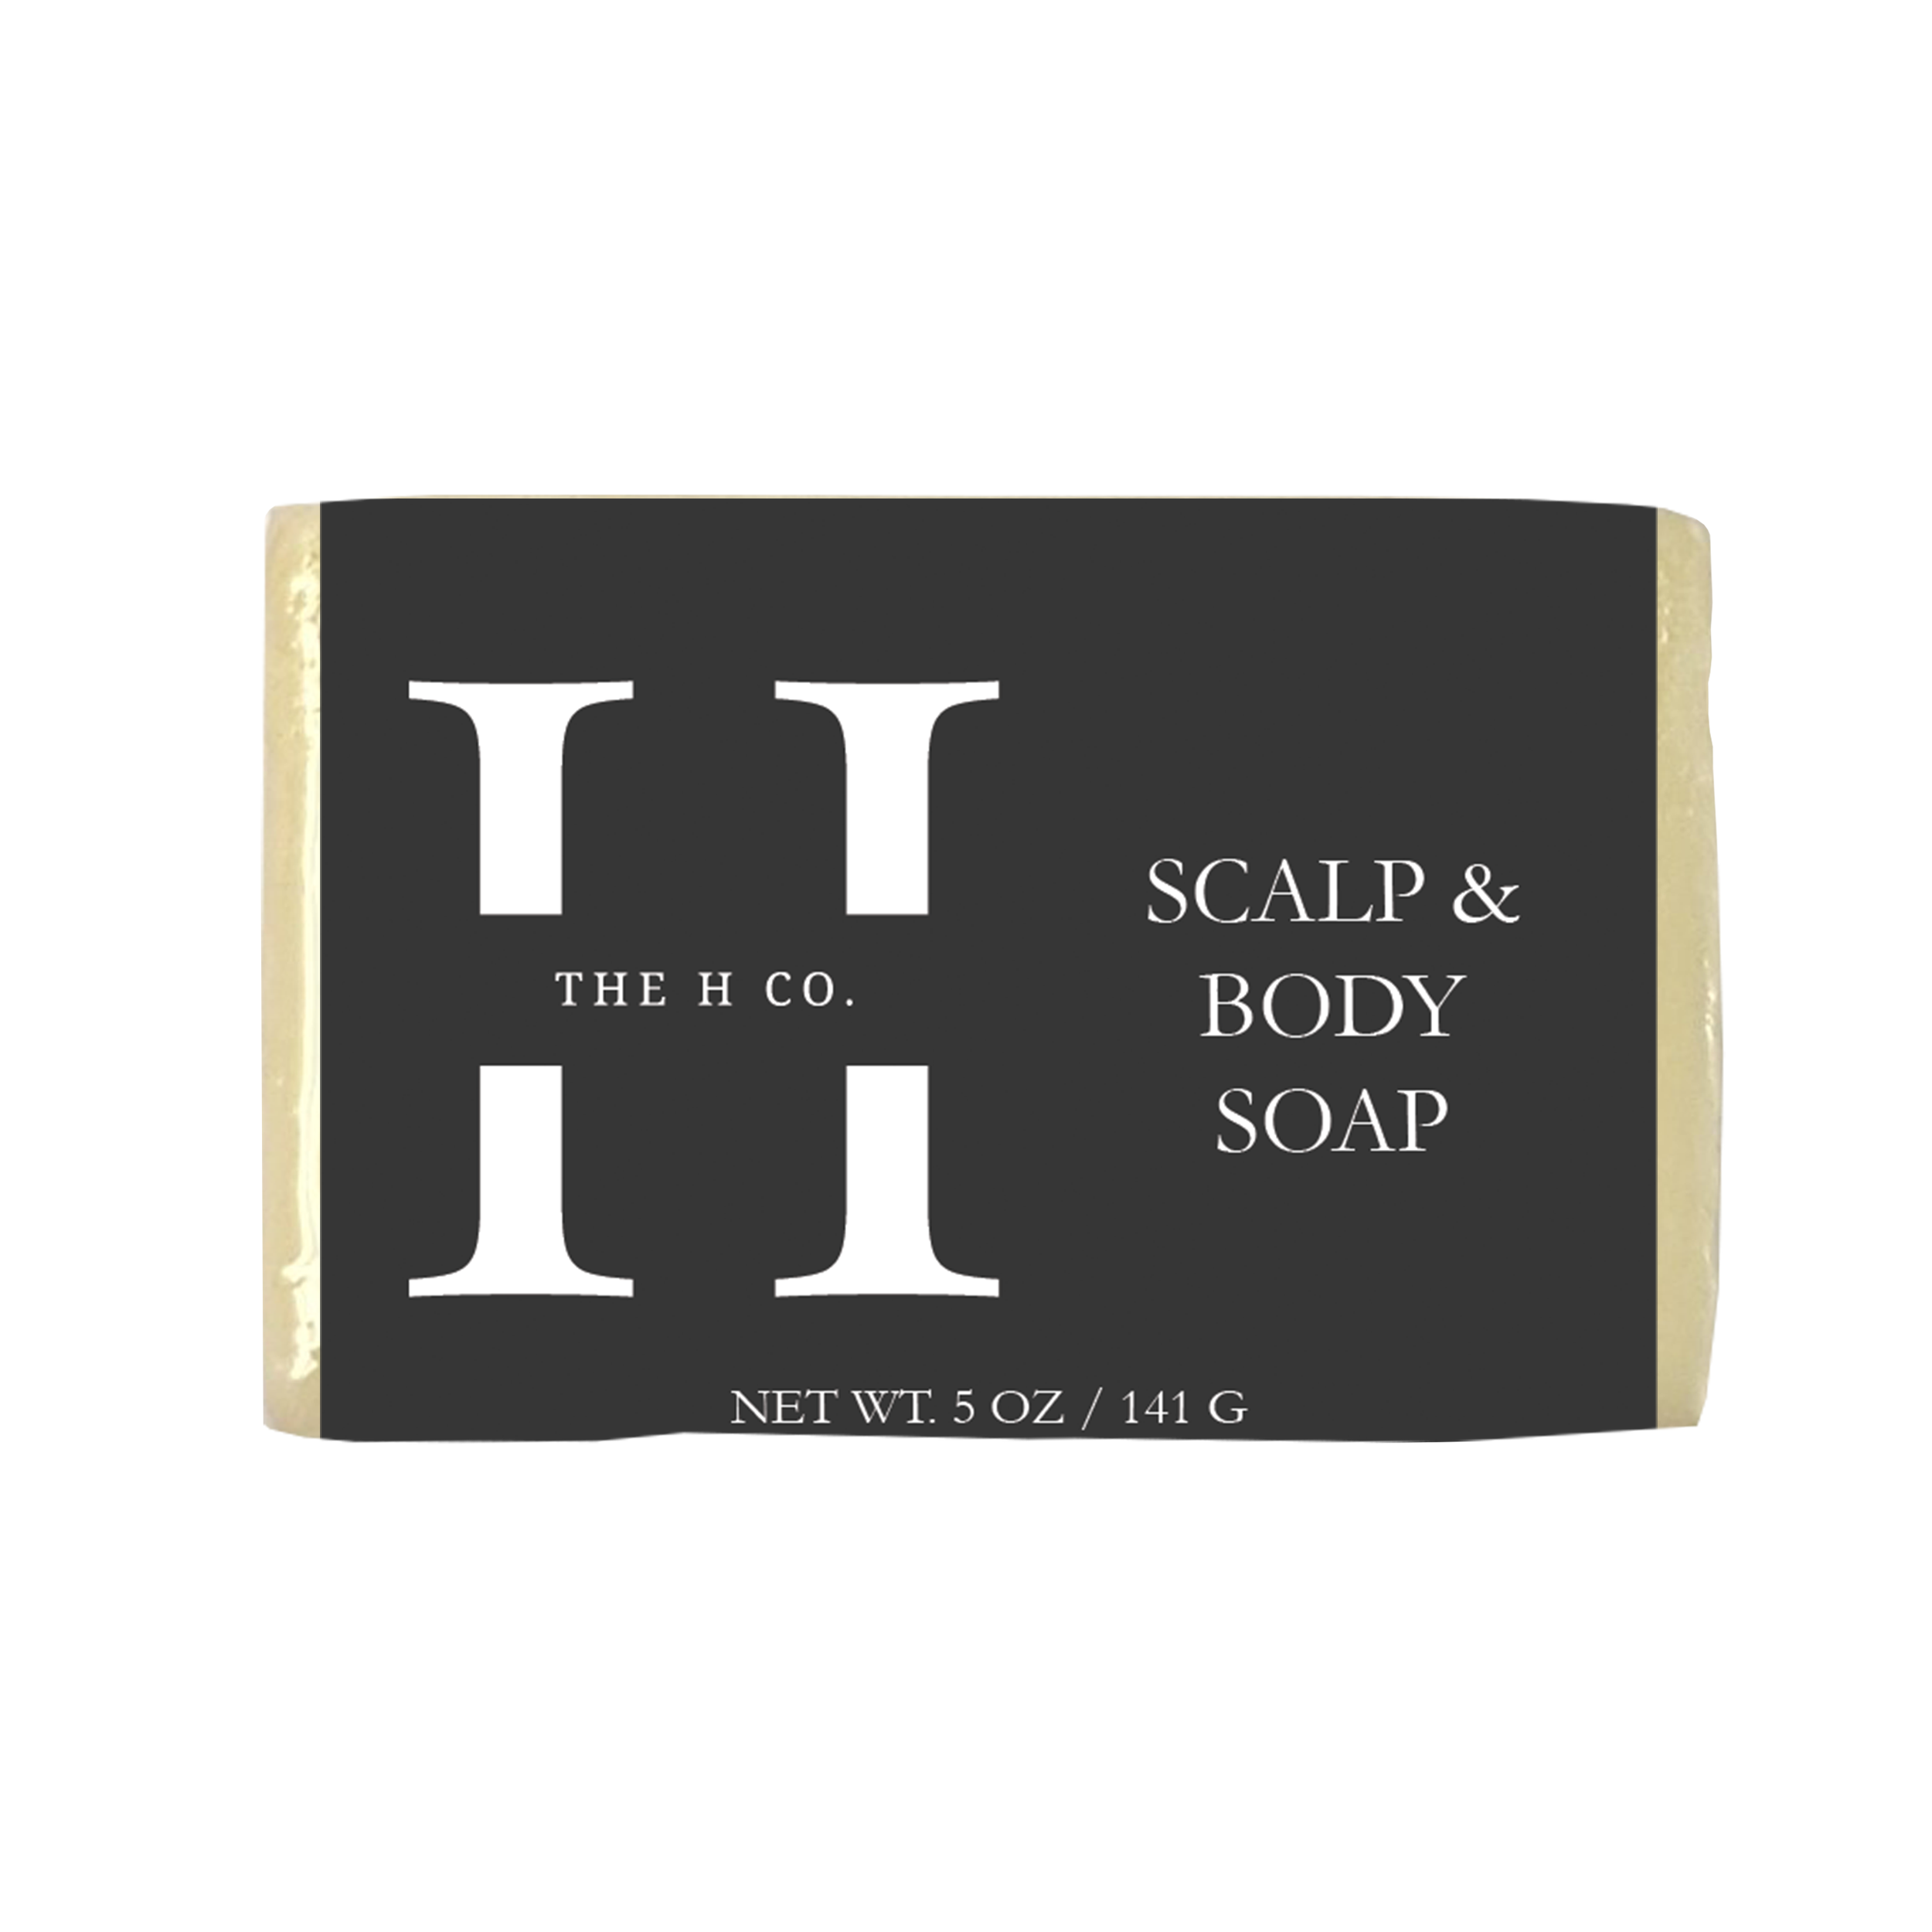 The Scalp & Body Soap